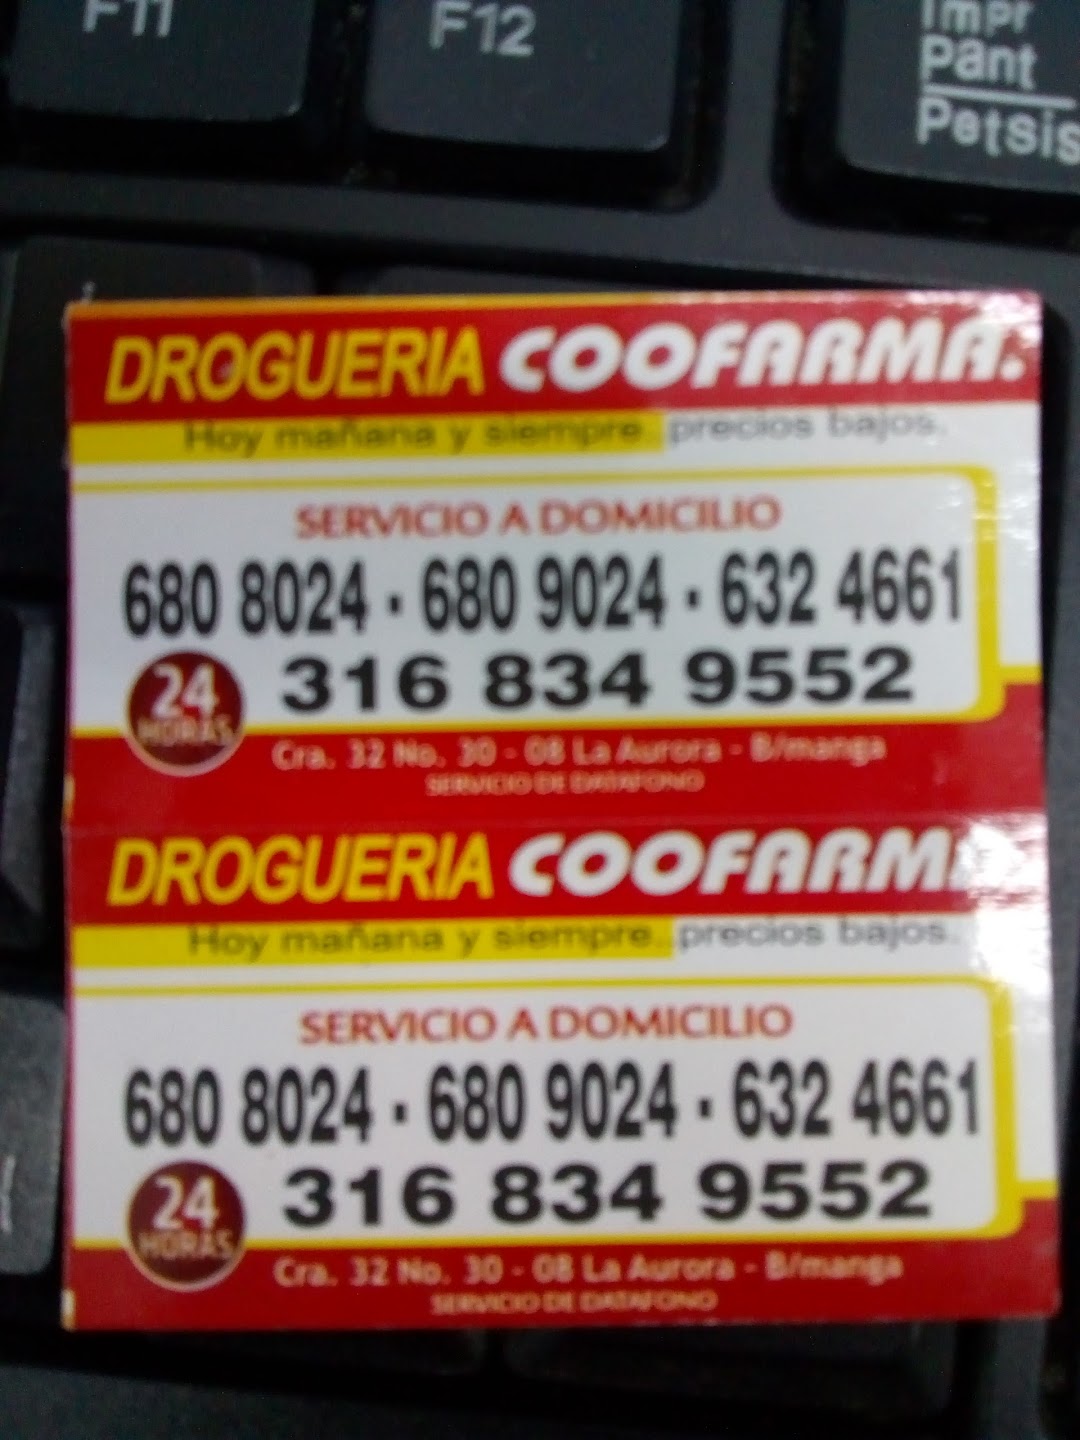 Droguería Coofarma